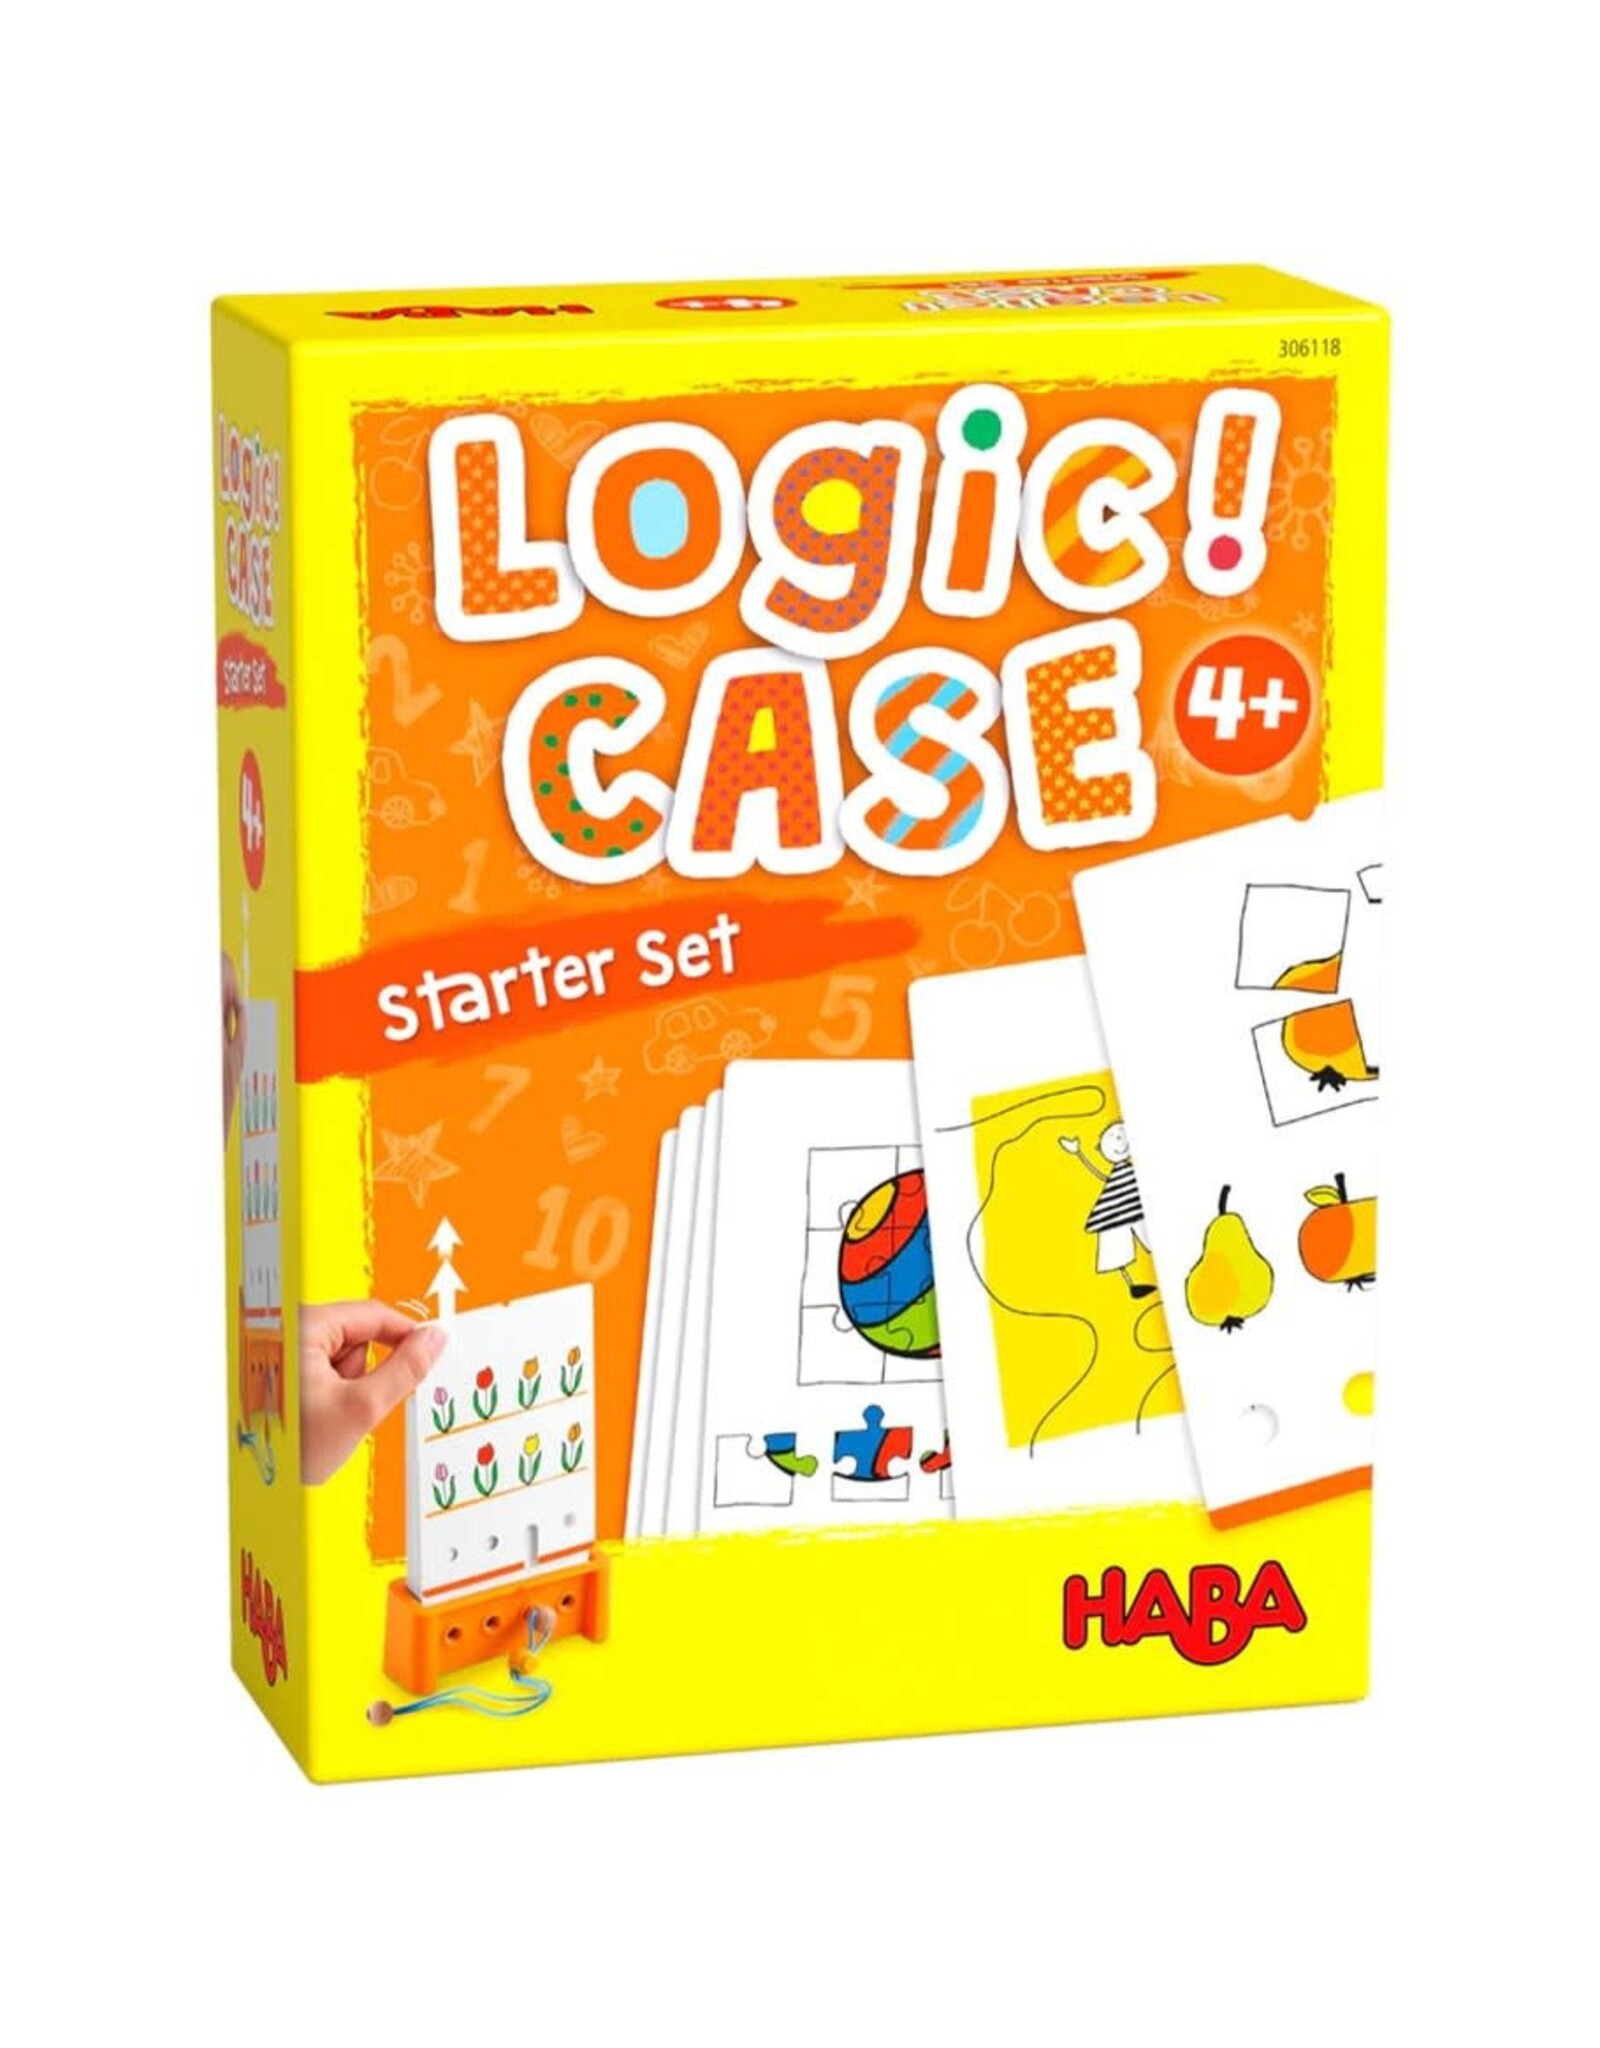 HABA Logic! CASE: Starter Set 4+